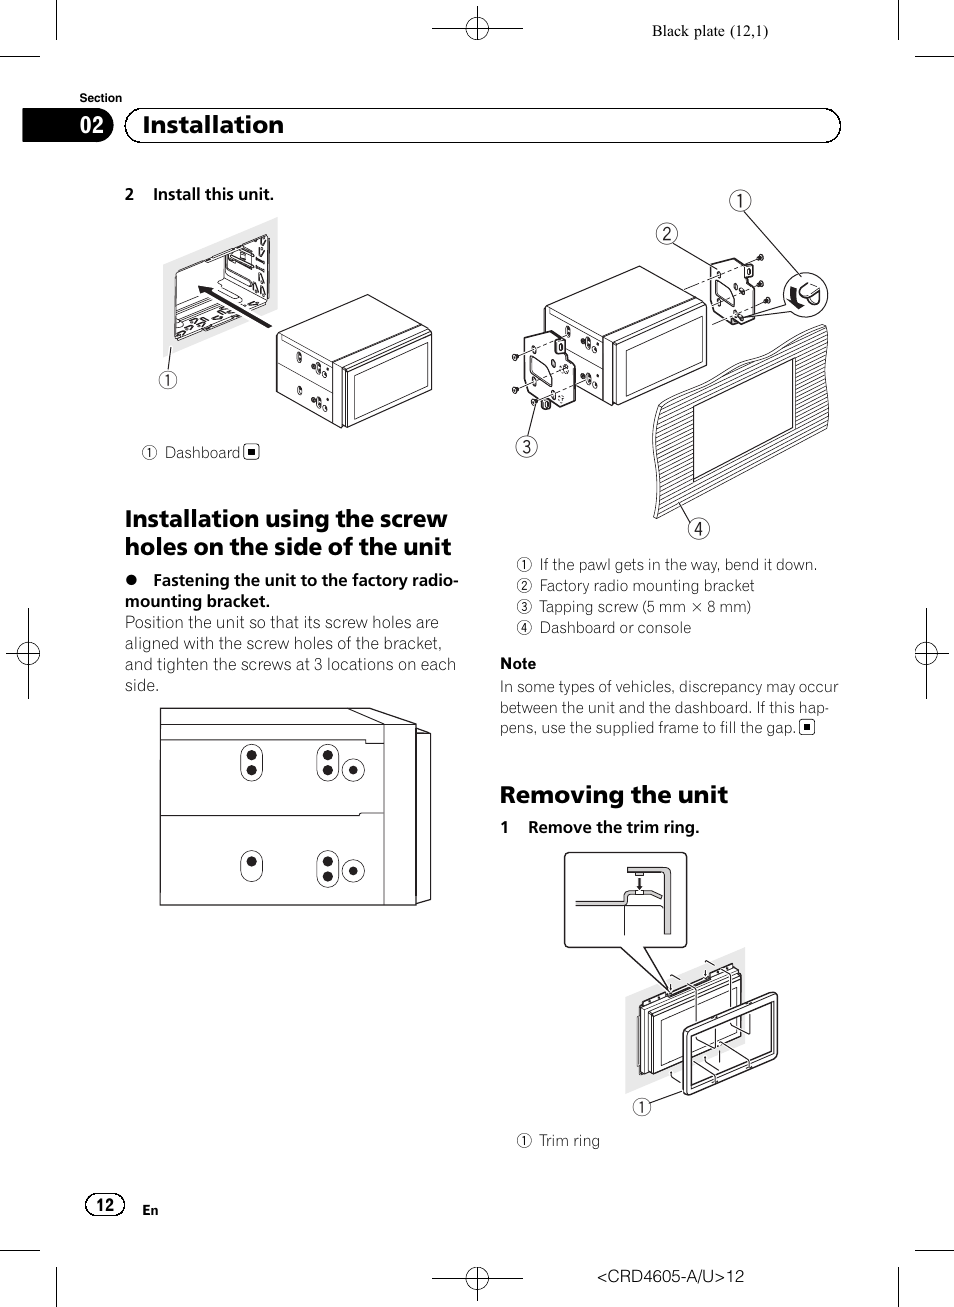 Removing the unit, 02 installation | Pioneer AVH-8400BT User Manual | Page  12 / 88 | Original mode